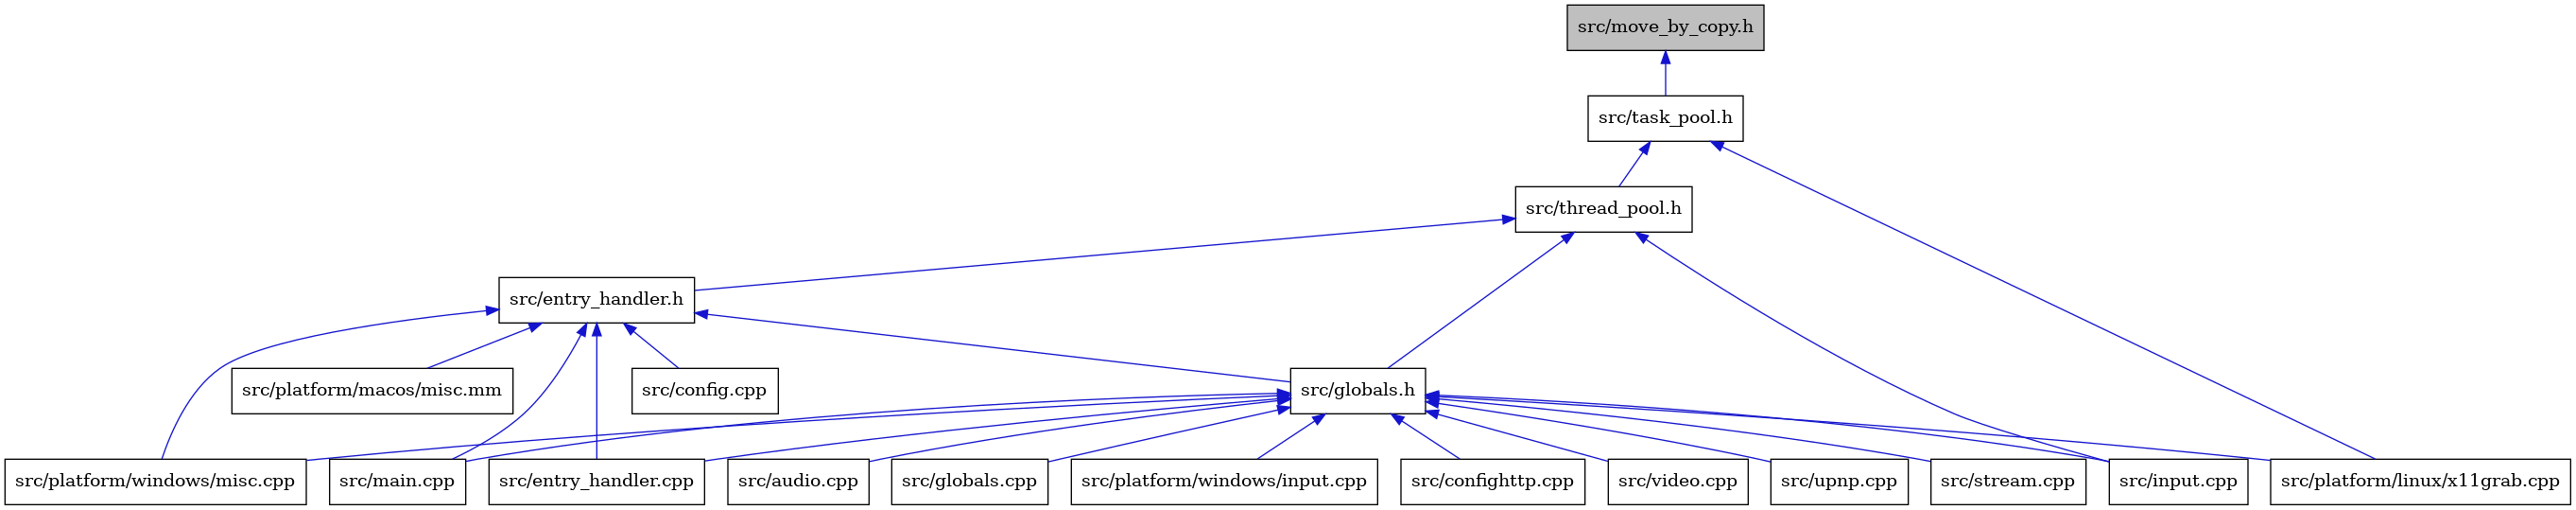 digraph {
    graph [bgcolor="#00000000"]
    node [shape=rectangle style=filled fillcolor="#FFFFFF" font=Helvetica padding=2]
    edge [color="#1414CE"]
    "8" [label="src/globals.h" tooltip="src/globals.h"]
    "5" [label="src/entry_handler.h" tooltip="src/entry_handler.h"]
    "14" [label="src/platform/windows/input.cpp" tooltip="src/platform/windows/input.cpp"]
    "7" [label="src/entry_handler.cpp" tooltip="src/entry_handler.cpp"]
    "6" [label="src/config.cpp" tooltip="src/config.cpp"]
    "12" [label="src/input.cpp" tooltip="src/input.cpp"]
    "10" [label="src/confighttp.cpp" tooltip="src/confighttp.cpp"]
    "18" [label="src/video.cpp" tooltip="src/video.cpp"]
    "2" [label="src/task_pool.h" tooltip="src/task_pool.h"]
    "17" [label="src/upnp.cpp" tooltip="src/upnp.cpp"]
    "4" [label="src/thread_pool.h" tooltip="src/thread_pool.h"]
    "16" [label="src/stream.cpp" tooltip="src/stream.cpp"]
    "9" [label="src/audio.cpp" tooltip="src/audio.cpp"]
    "1" [label="src/move_by_copy.h" tooltip="src/move_by_copy.h" fillcolor="#BFBFBF"]
    "11" [label="src/globals.cpp" tooltip="src/globals.cpp"]
    "15" [label="src/platform/windows/misc.cpp" tooltip="src/platform/windows/misc.cpp"]
    "19" [label="src/platform/macos/misc.mm" tooltip="src/platform/macos/misc.mm"]
    "3" [label="src/platform/linux/x11grab.cpp" tooltip="src/platform/linux/x11grab.cpp"]
    "13" [label="src/main.cpp" tooltip="src/main.cpp"]
    "8" -> "9" [dir=back tooltip="include"]
    "8" -> "10" [dir=back tooltip="include"]
    "8" -> "7" [dir=back tooltip="include"]
    "8" -> "11" [dir=back tooltip="include"]
    "8" -> "12" [dir=back tooltip="include"]
    "8" -> "13" [dir=back tooltip="include"]
    "8" -> "3" [dir=back tooltip="include"]
    "8" -> "14" [dir=back tooltip="include"]
    "8" -> "15" [dir=back tooltip="include"]
    "8" -> "16" [dir=back tooltip="include"]
    "8" -> "17" [dir=back tooltip="include"]
    "8" -> "18" [dir=back tooltip="include"]
    "5" -> "6" [dir=back tooltip="include"]
    "5" -> "7" [dir=back tooltip="include"]
    "5" -> "8" [dir=back tooltip="include"]
    "5" -> "13" [dir=back tooltip="include"]
    "5" -> "19" [dir=back tooltip="include"]
    "5" -> "15" [dir=back tooltip="include"]
    "2" -> "3" [dir=back tooltip="include"]
    "2" -> "4" [dir=back tooltip="include"]
    "4" -> "5" [dir=back tooltip="include"]
    "4" -> "8" [dir=back tooltip="include"]
    "4" -> "12" [dir=back tooltip="include"]
    "1" -> "2" [dir=back tooltip="include"]
}